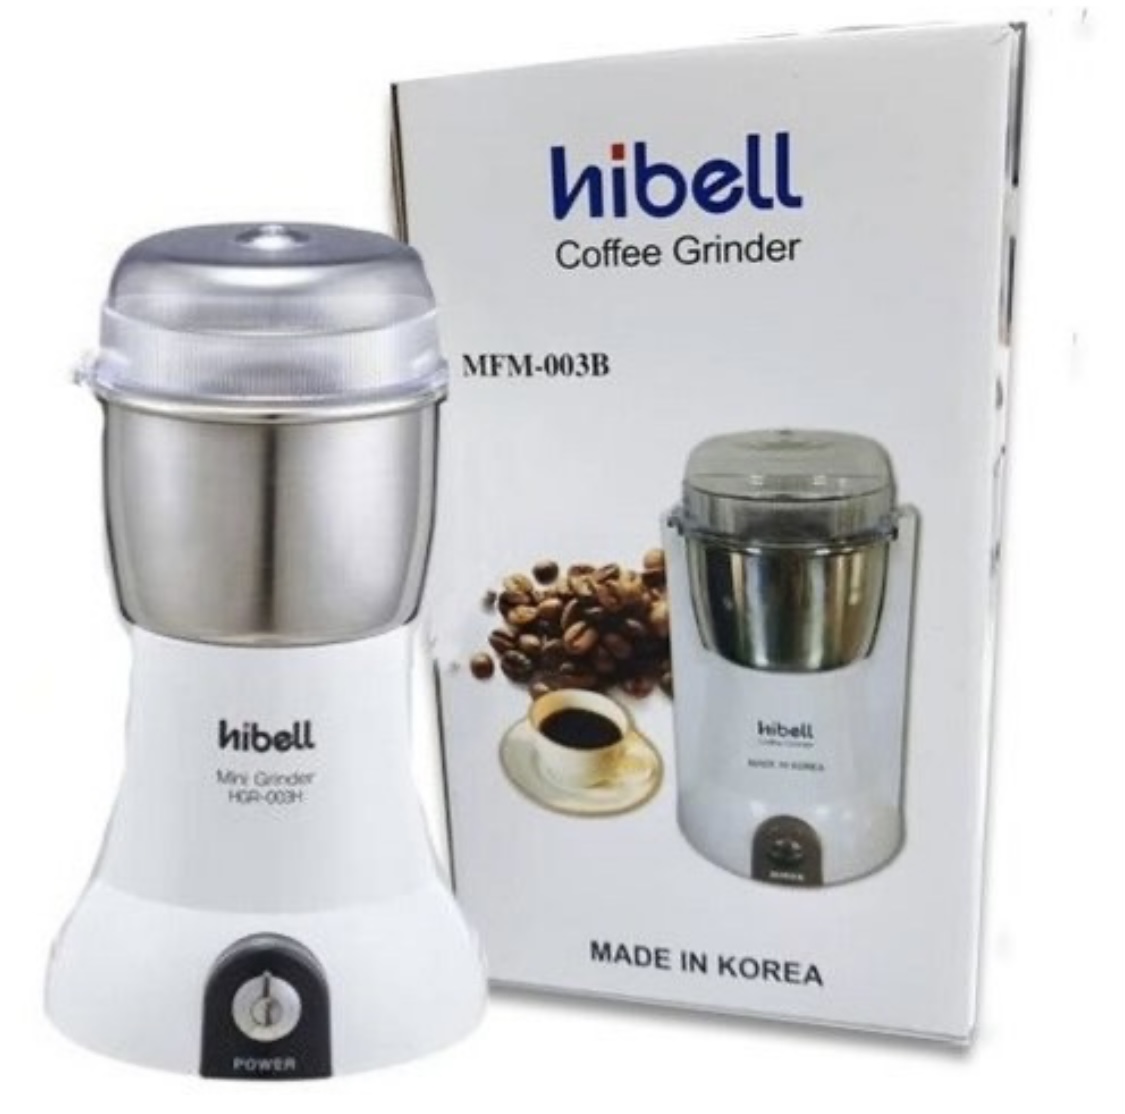 آسیاب کوچک هیبل کره ایHIBELL MFM_003B ا Hibell coffee grinder